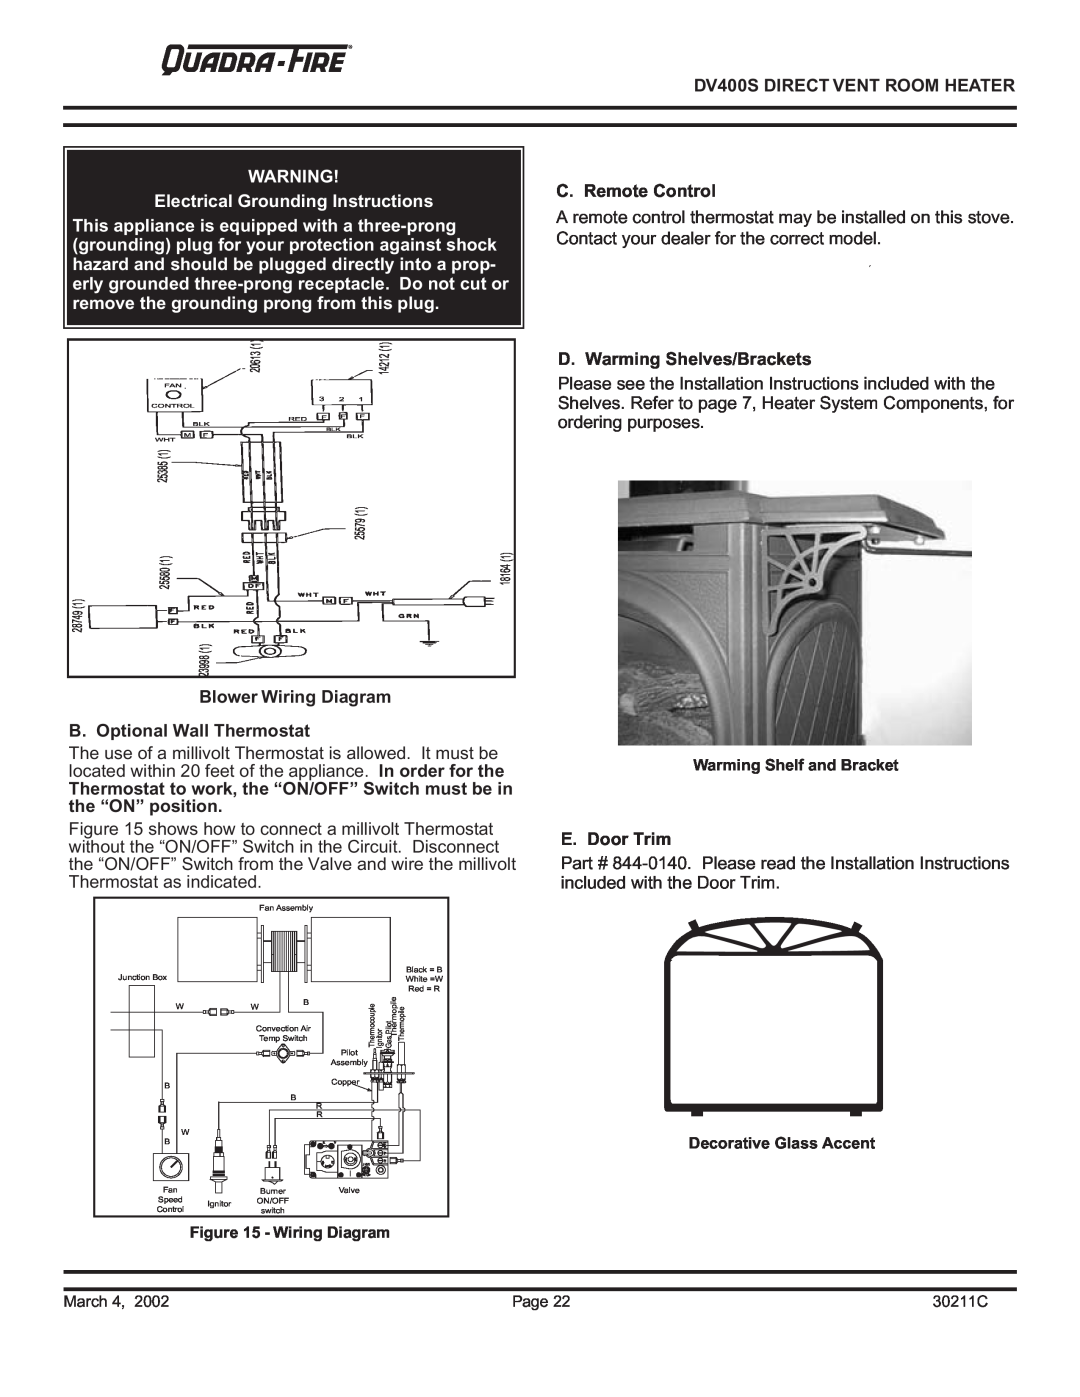 Quadra-Fire DV400S DIRECT VENT ROOM HEATER, Electrical Grounding Instructions, C. Remote Control, E. Door Trim 